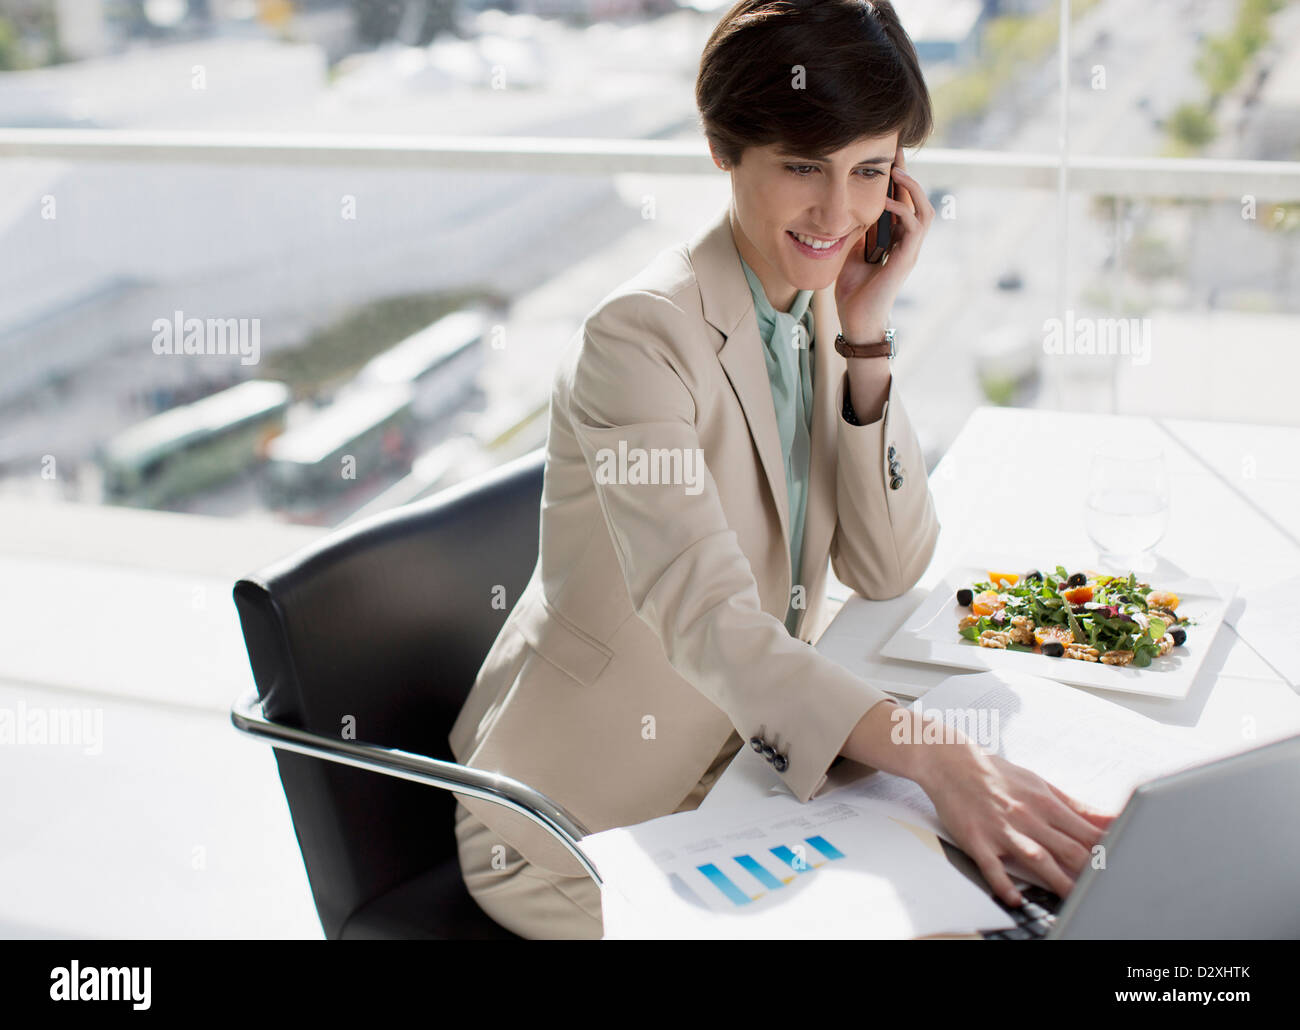 Businesswoman multitasking at desk Stock Photo